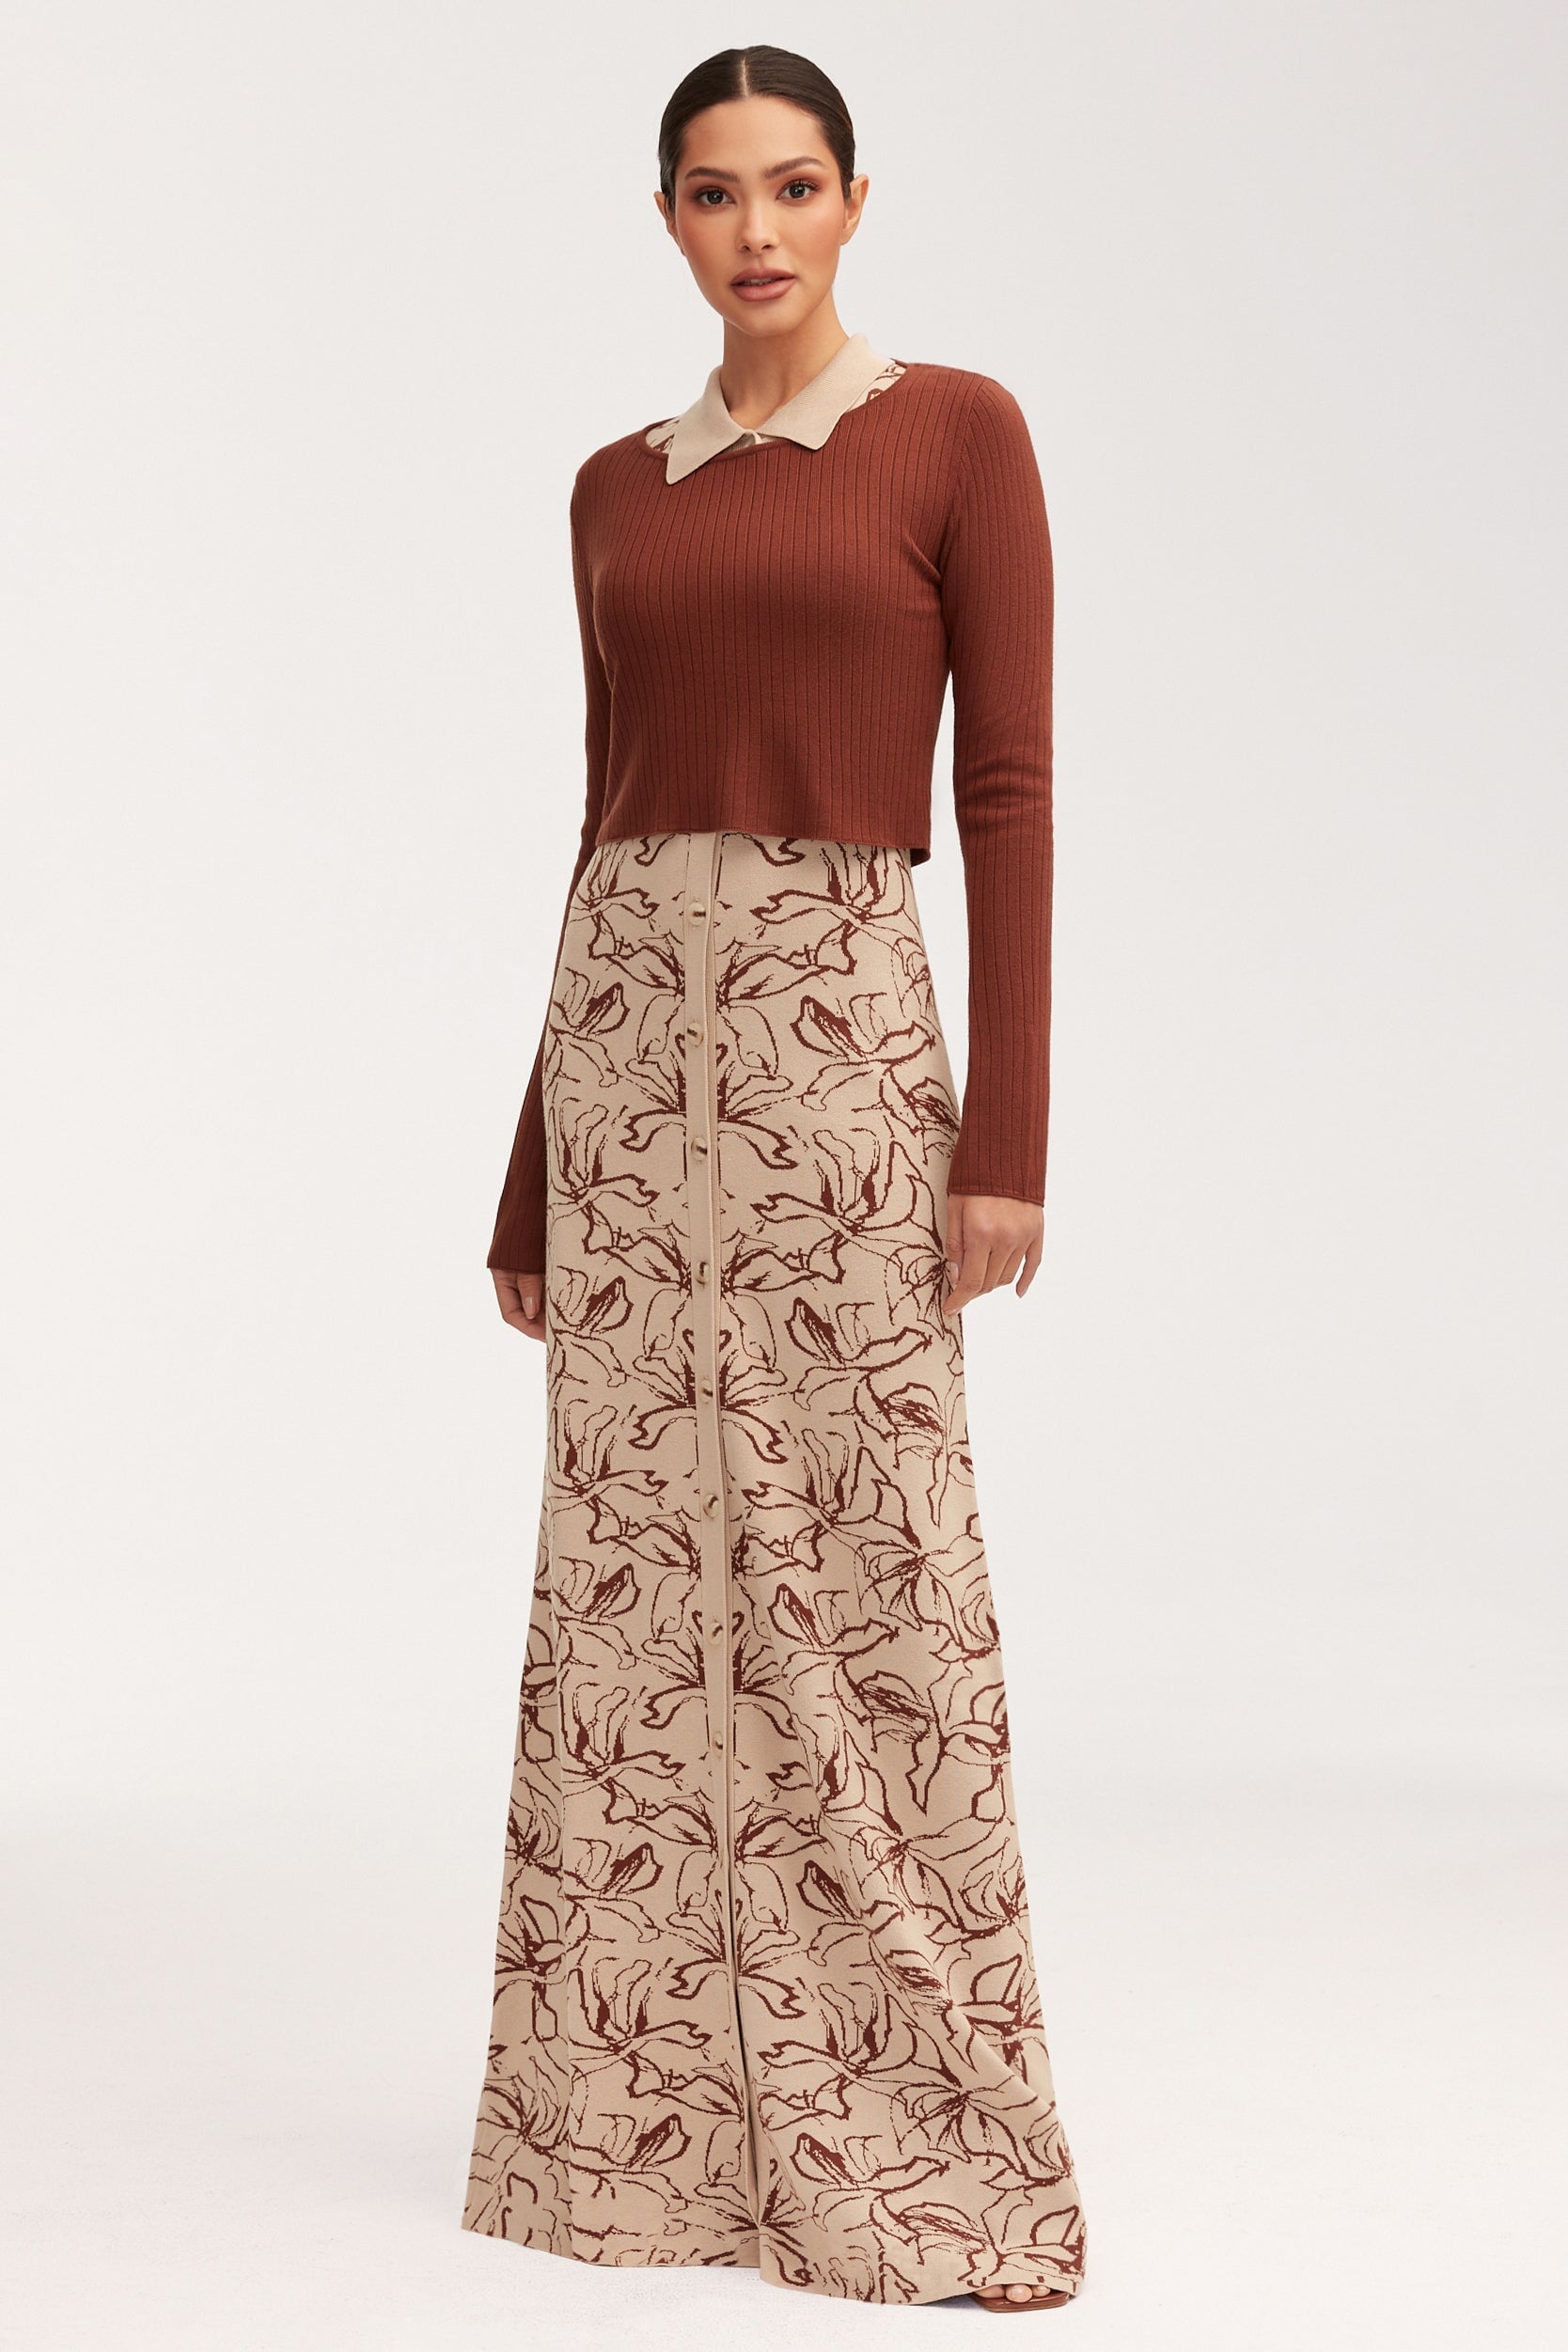 Claire Jacquard Knit Top & Maxi Dress Set Sets Veiled 